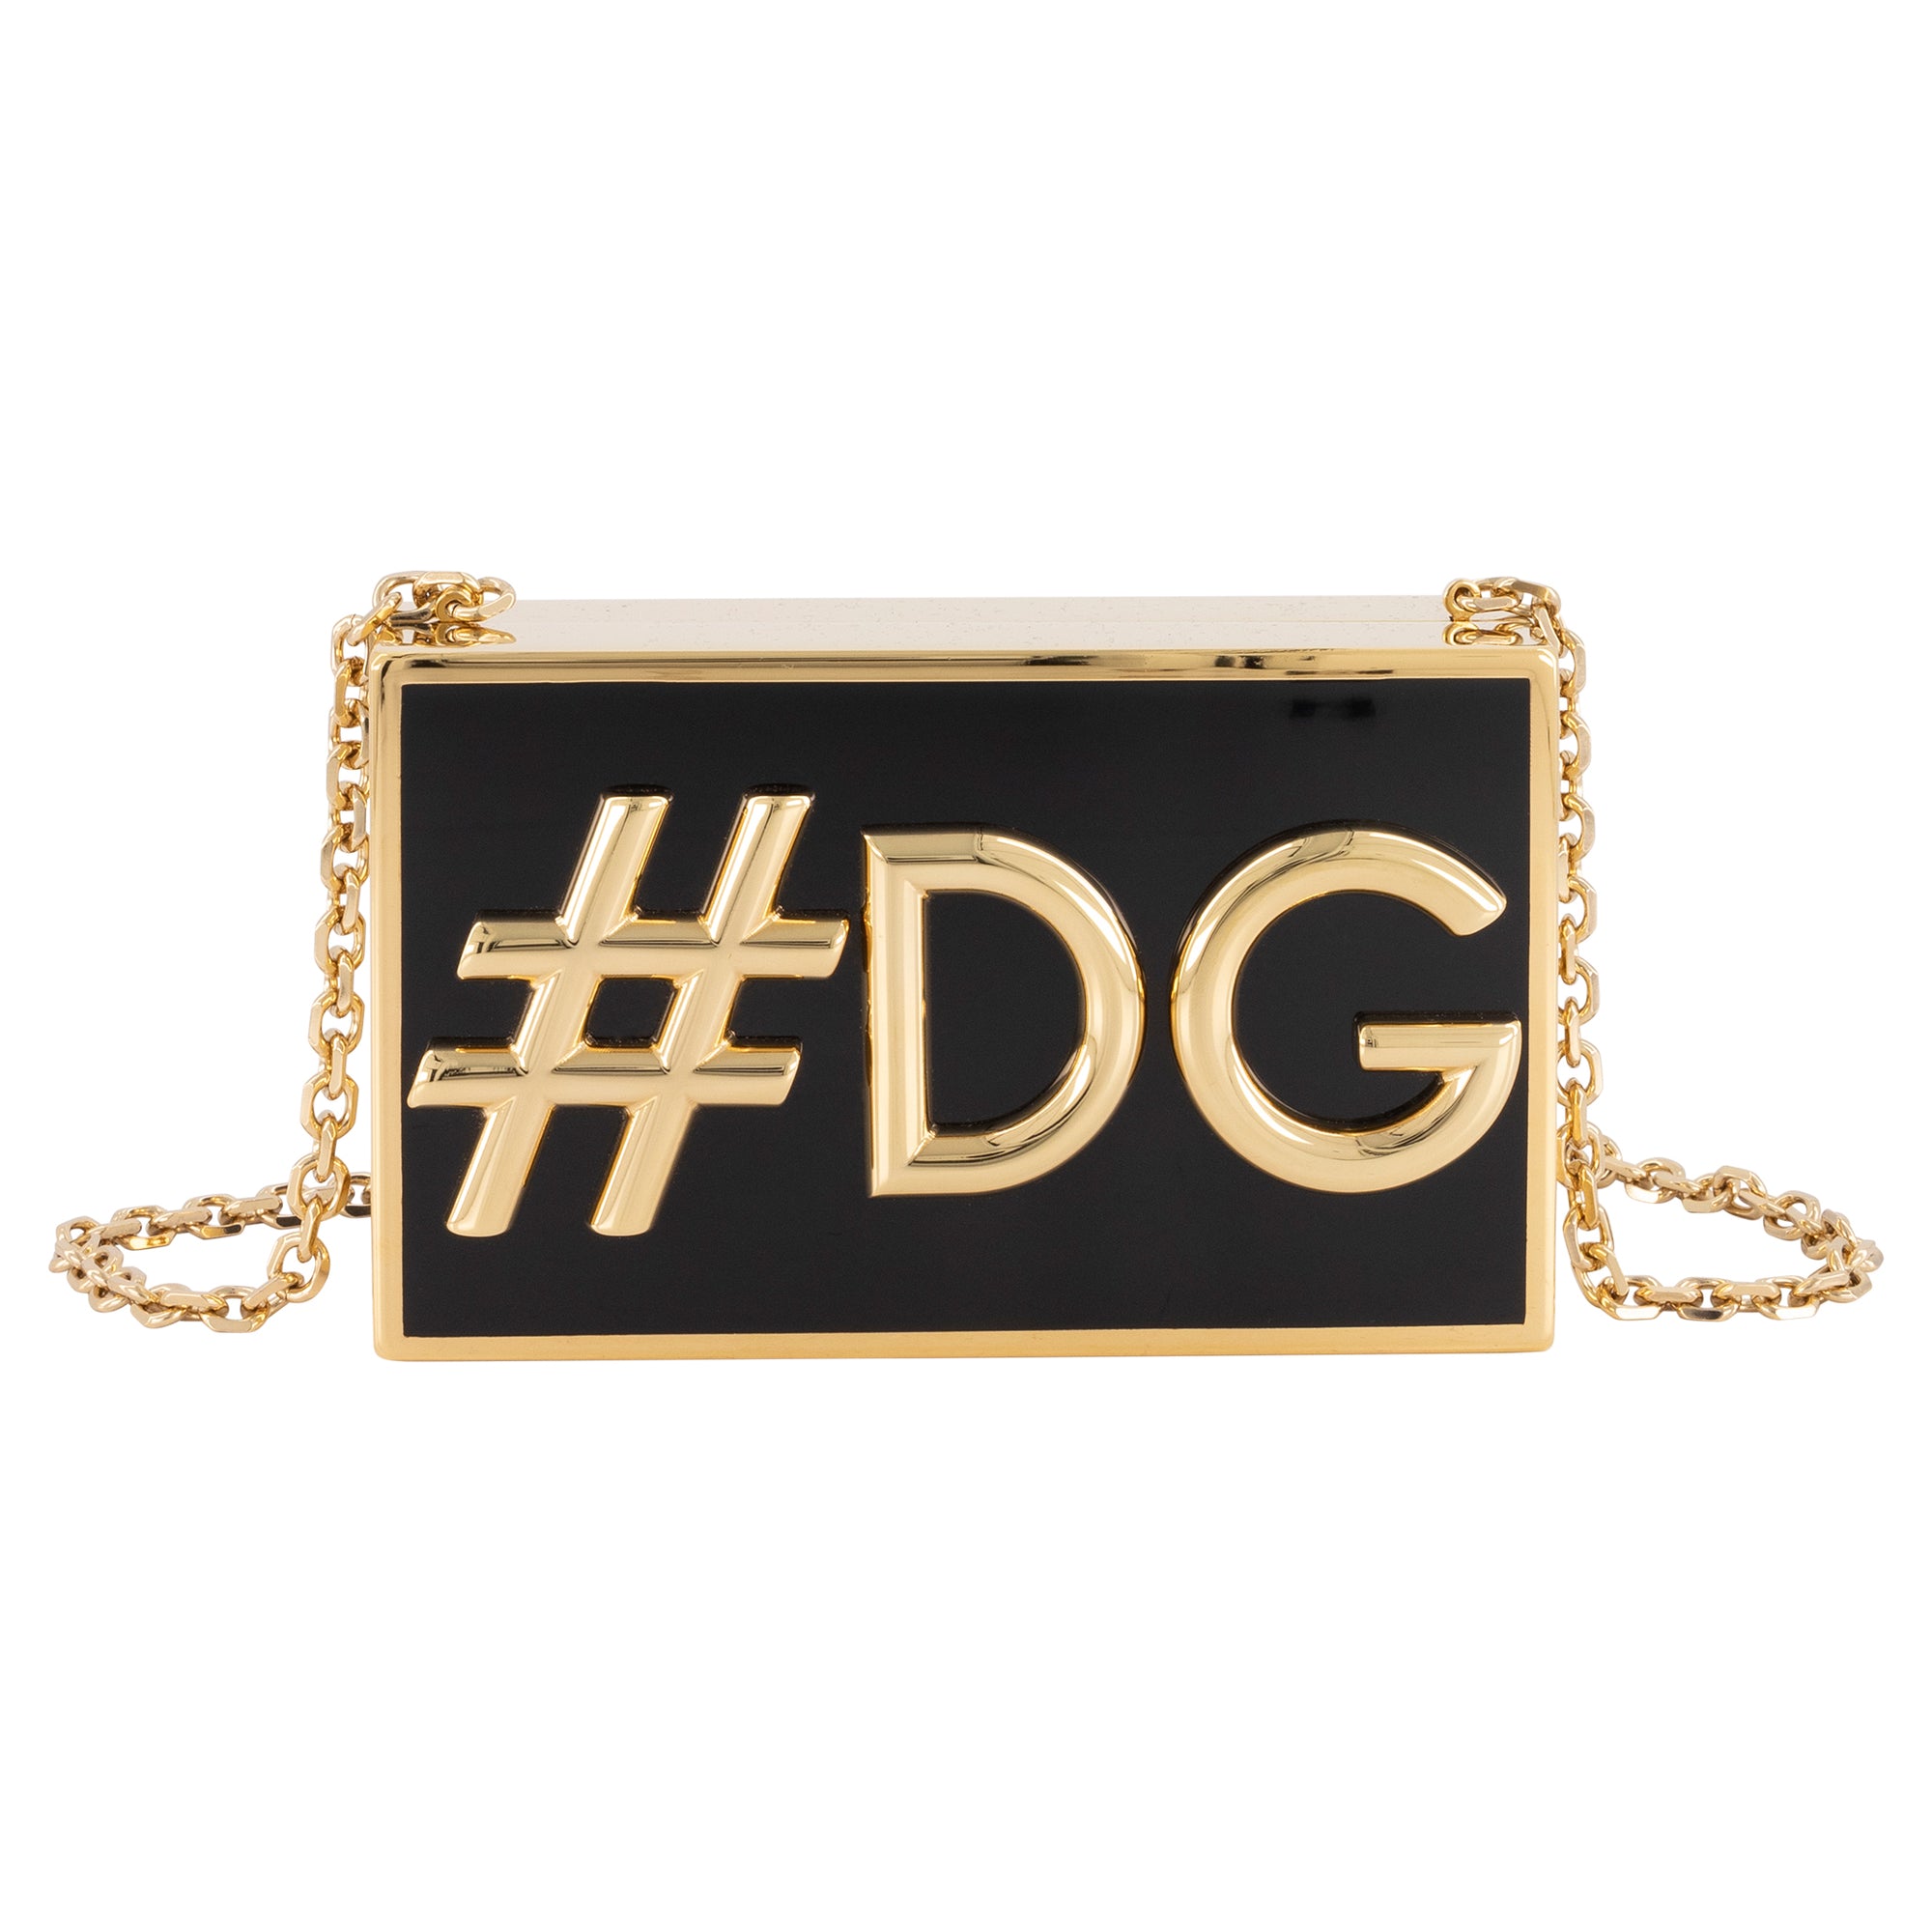 Dolce & Gabbana #DG Clutch Bag